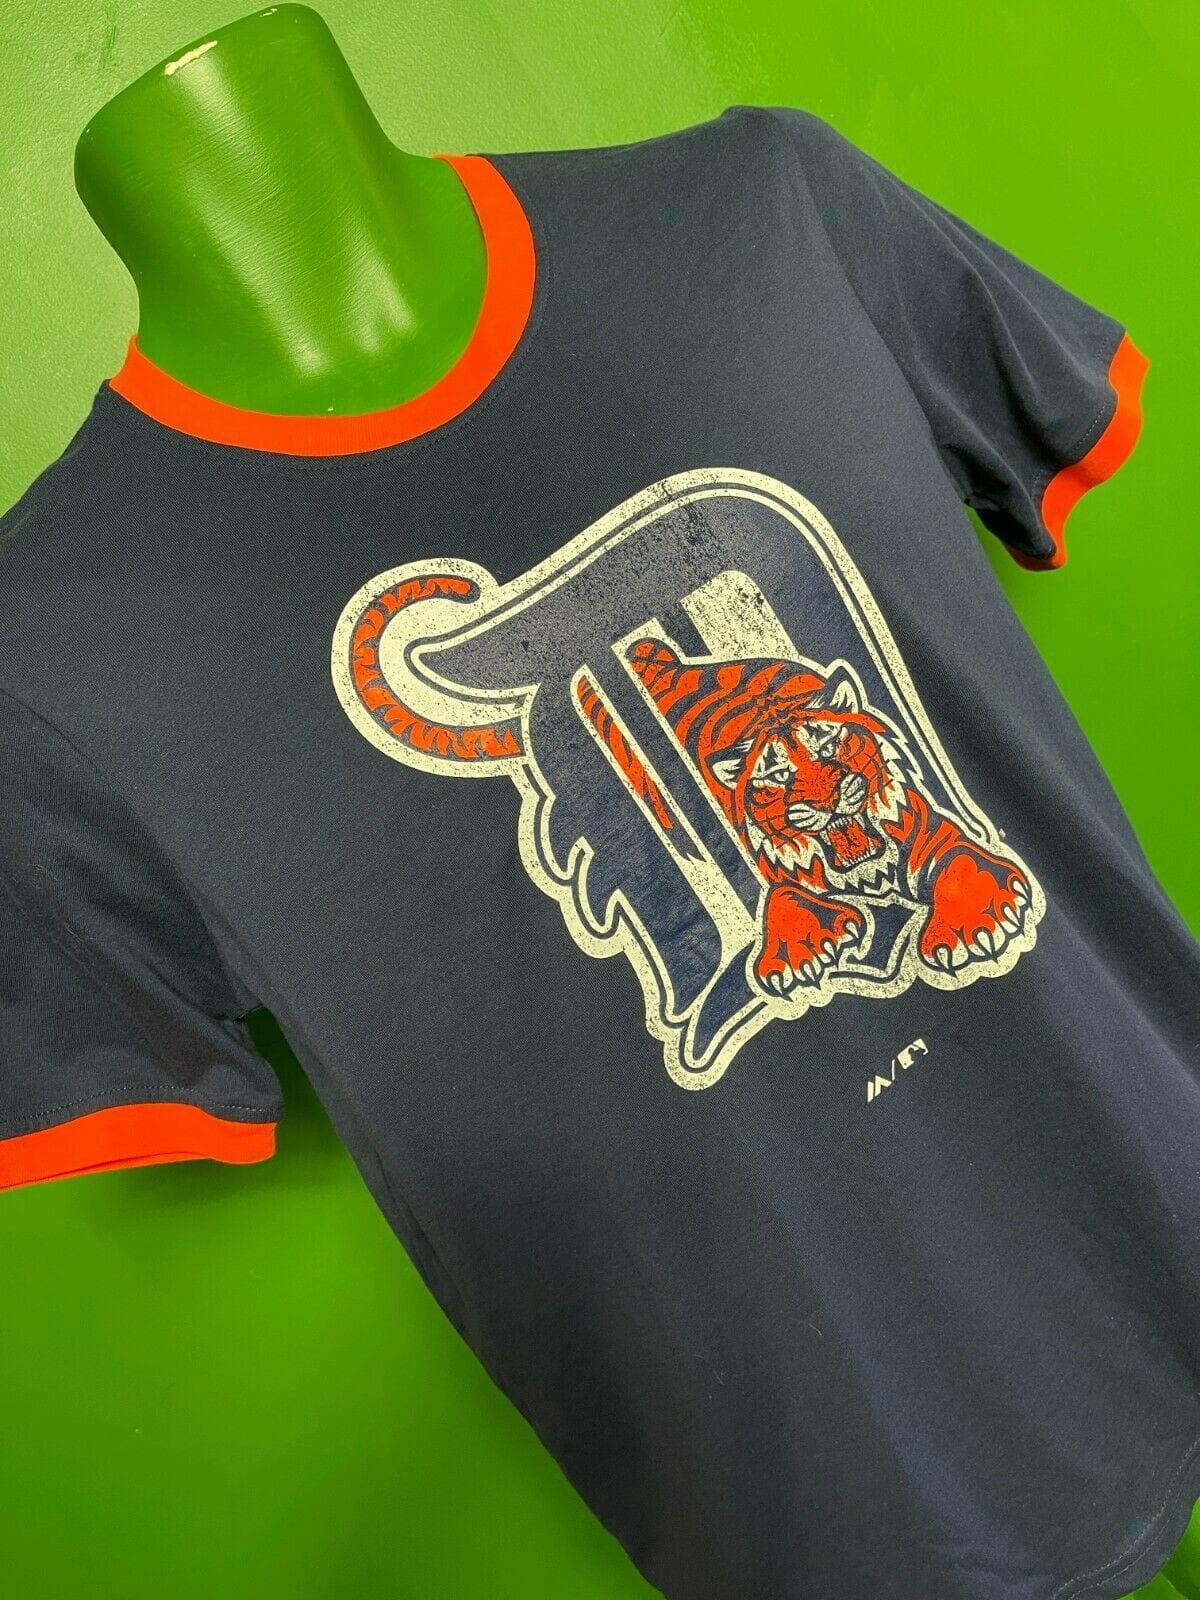 MLB Detroit Tigers Majestic Ringer T-Shirt Youth Large 14-16